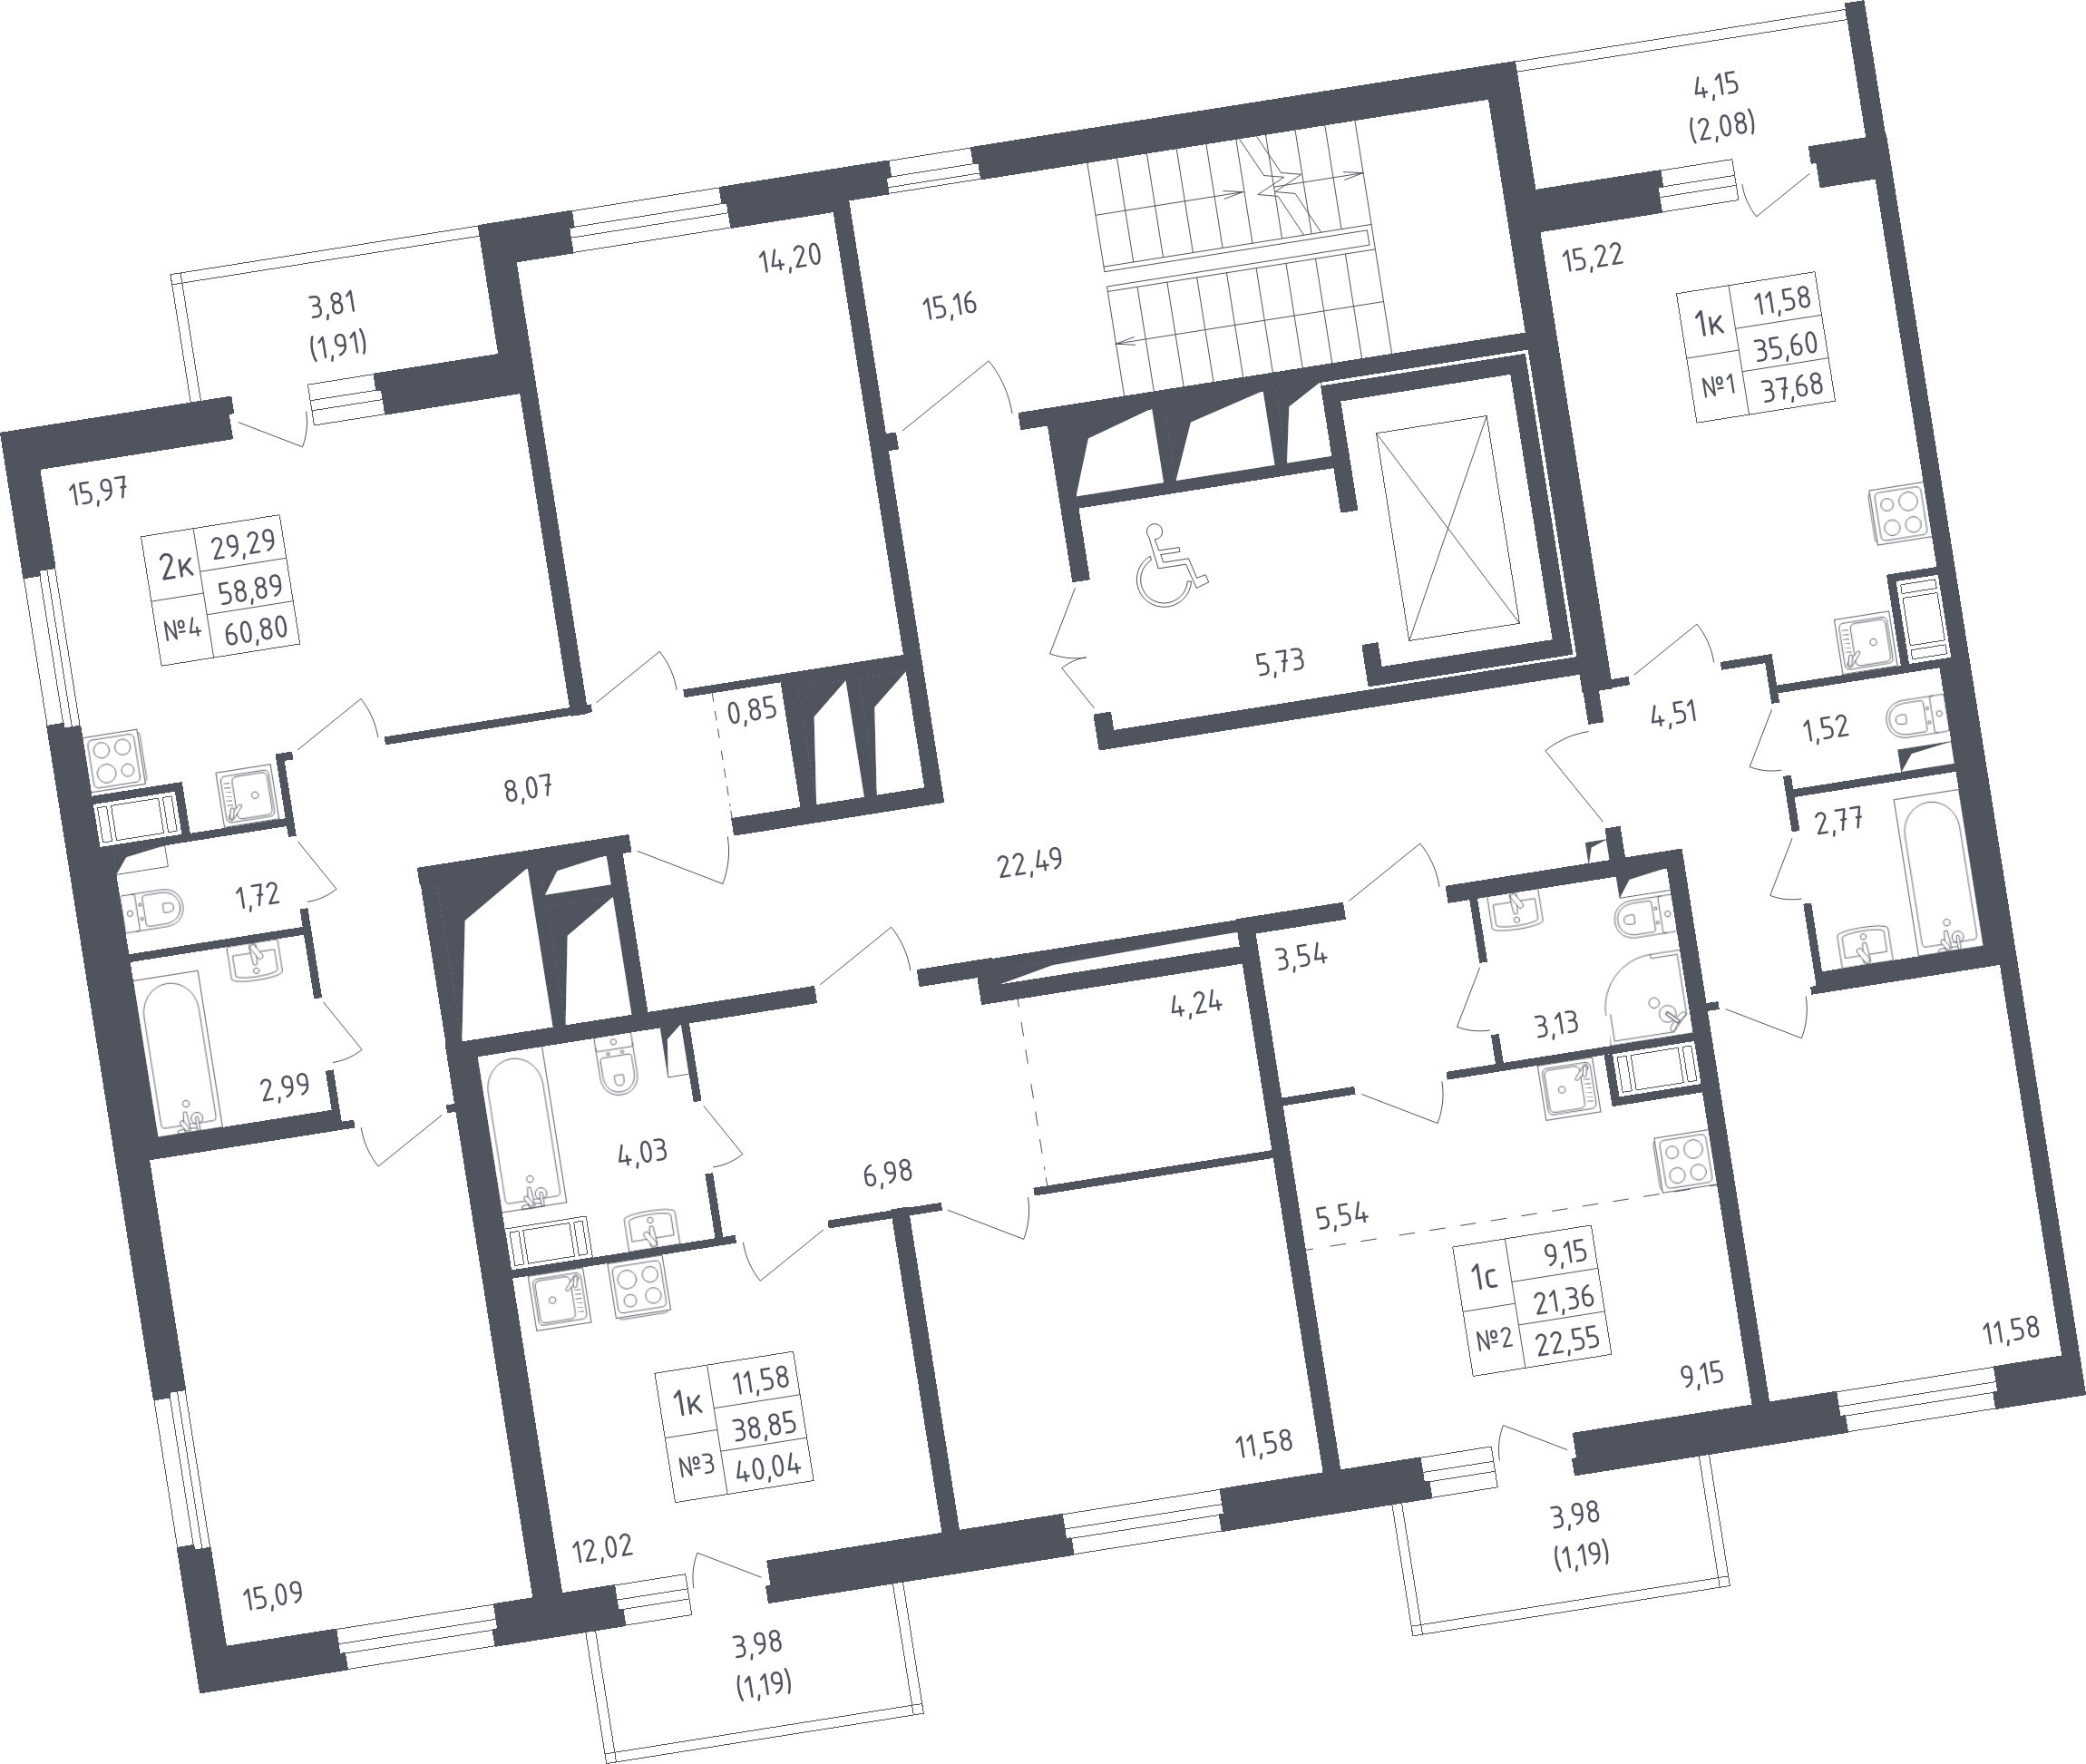 1-комнатная квартира, 40.04 м² в ЖК "Астрид" - планировка этажа